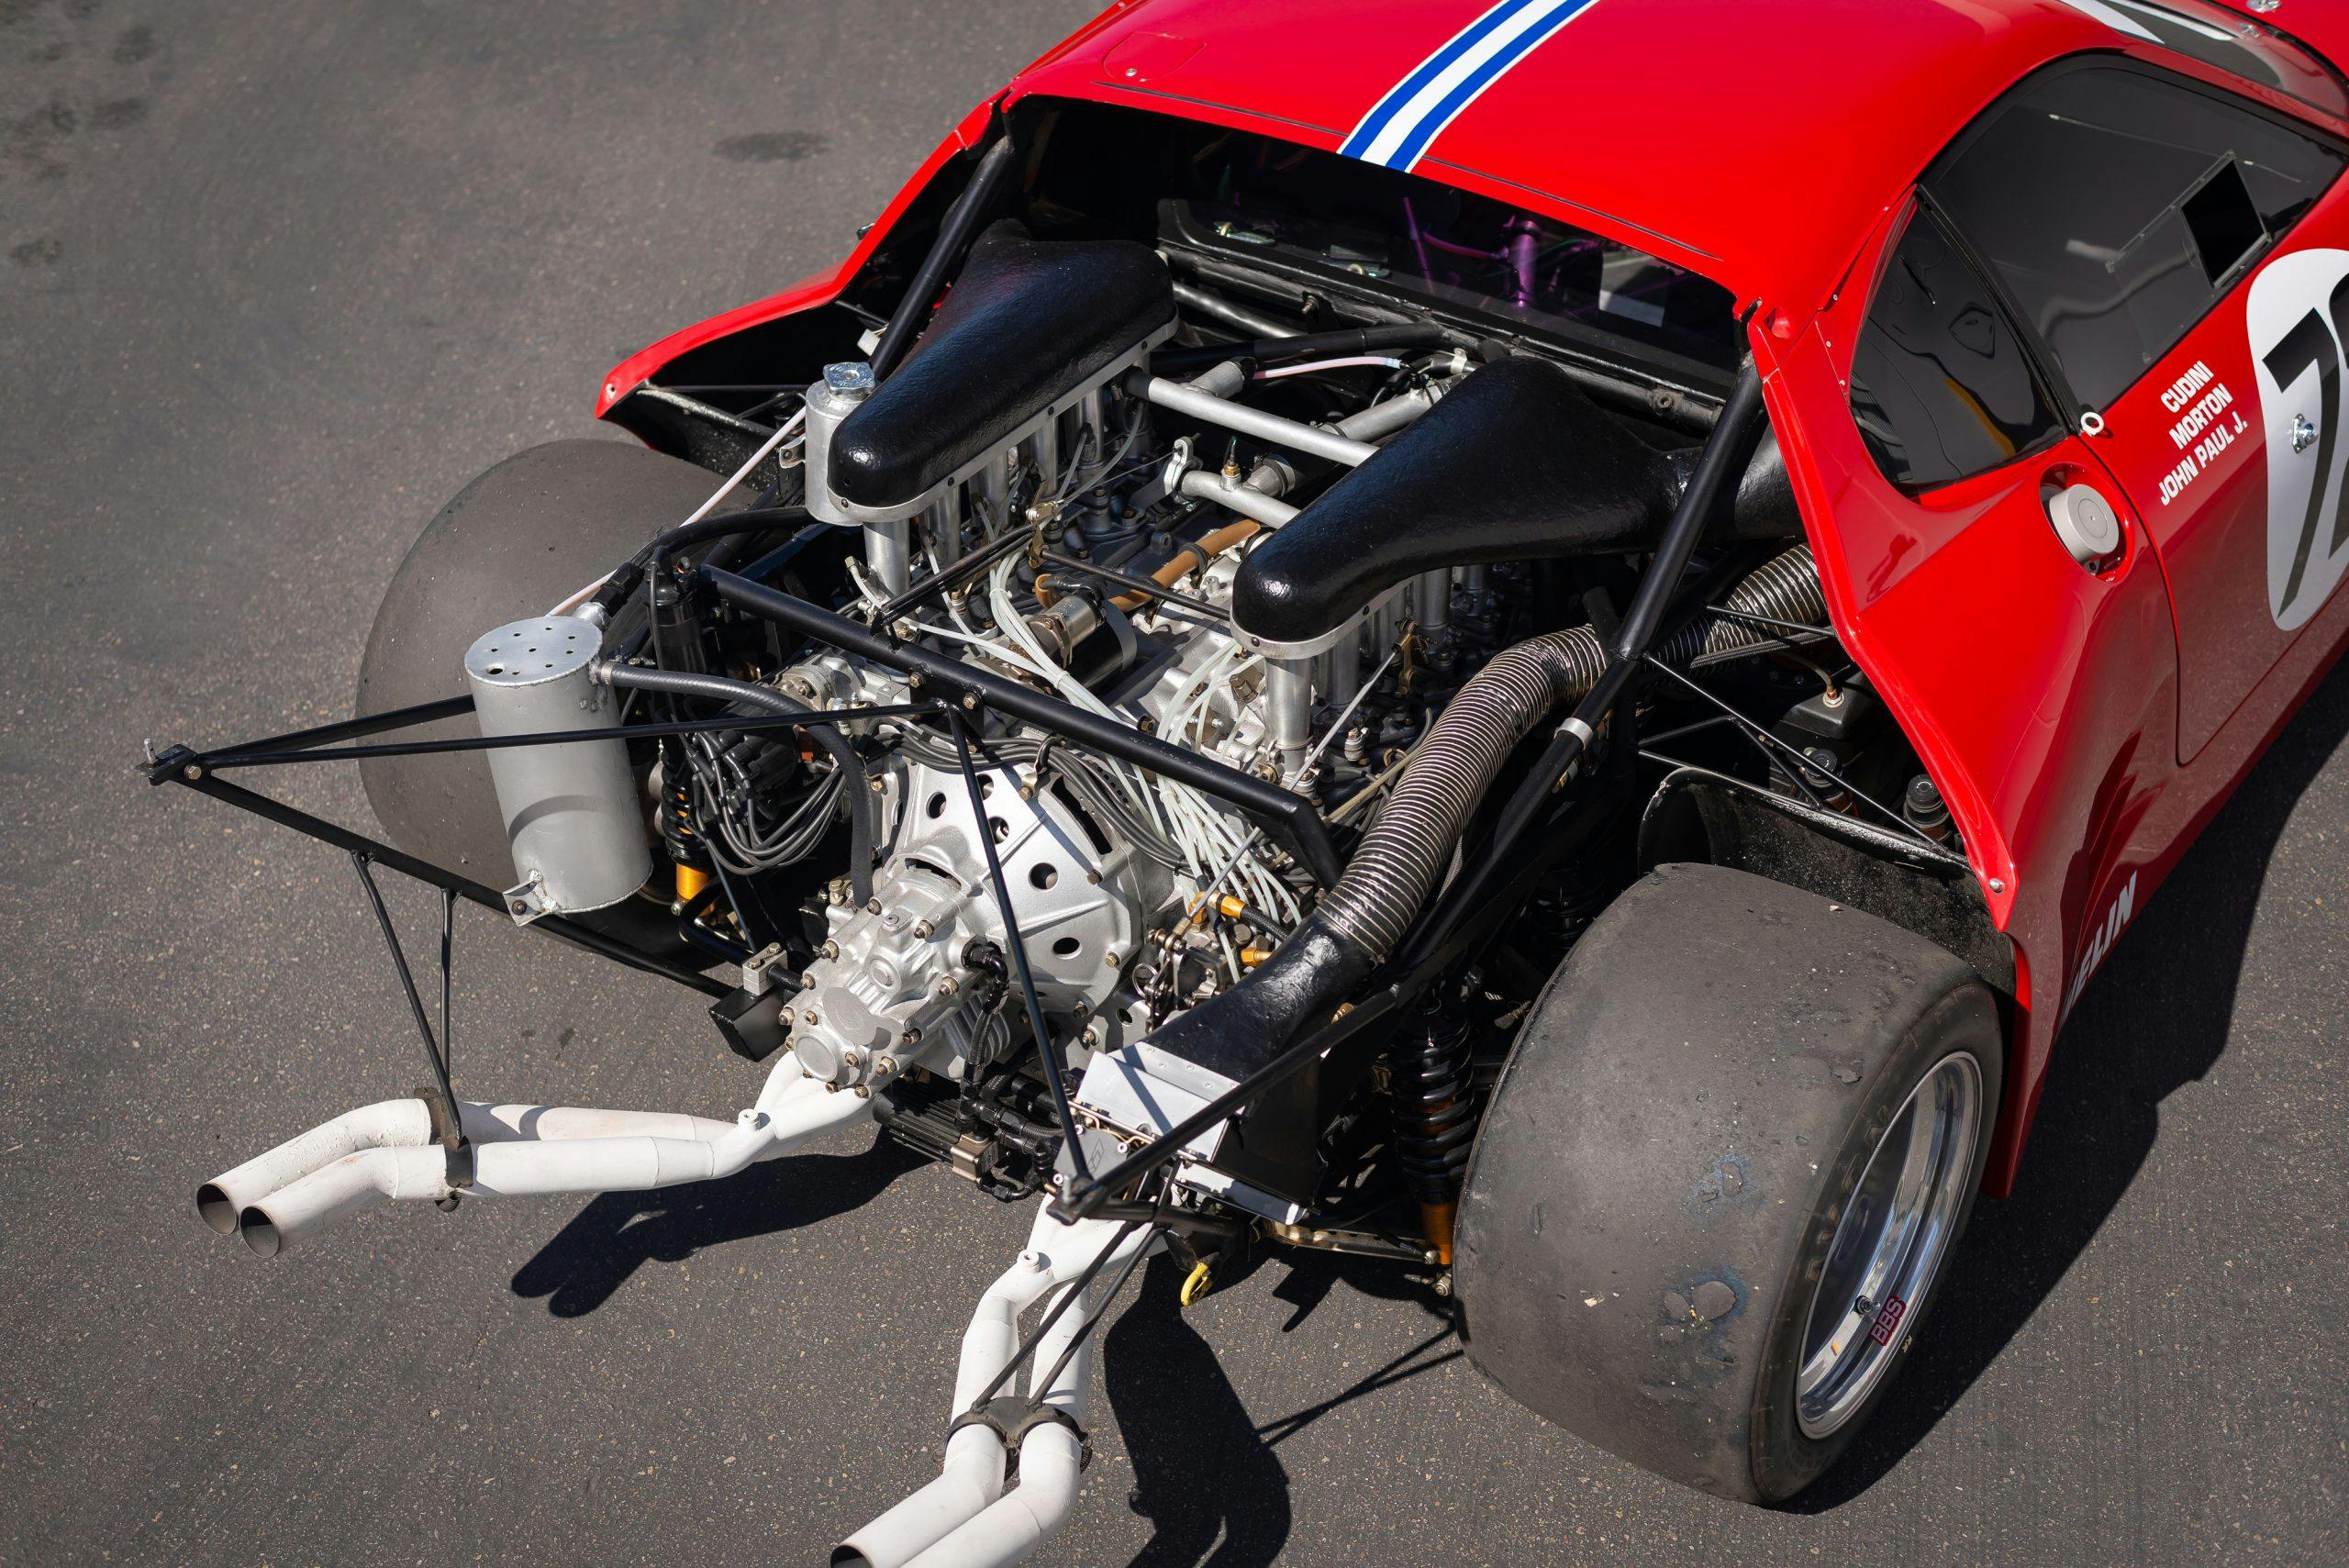 1981 Ferrari 512 engine